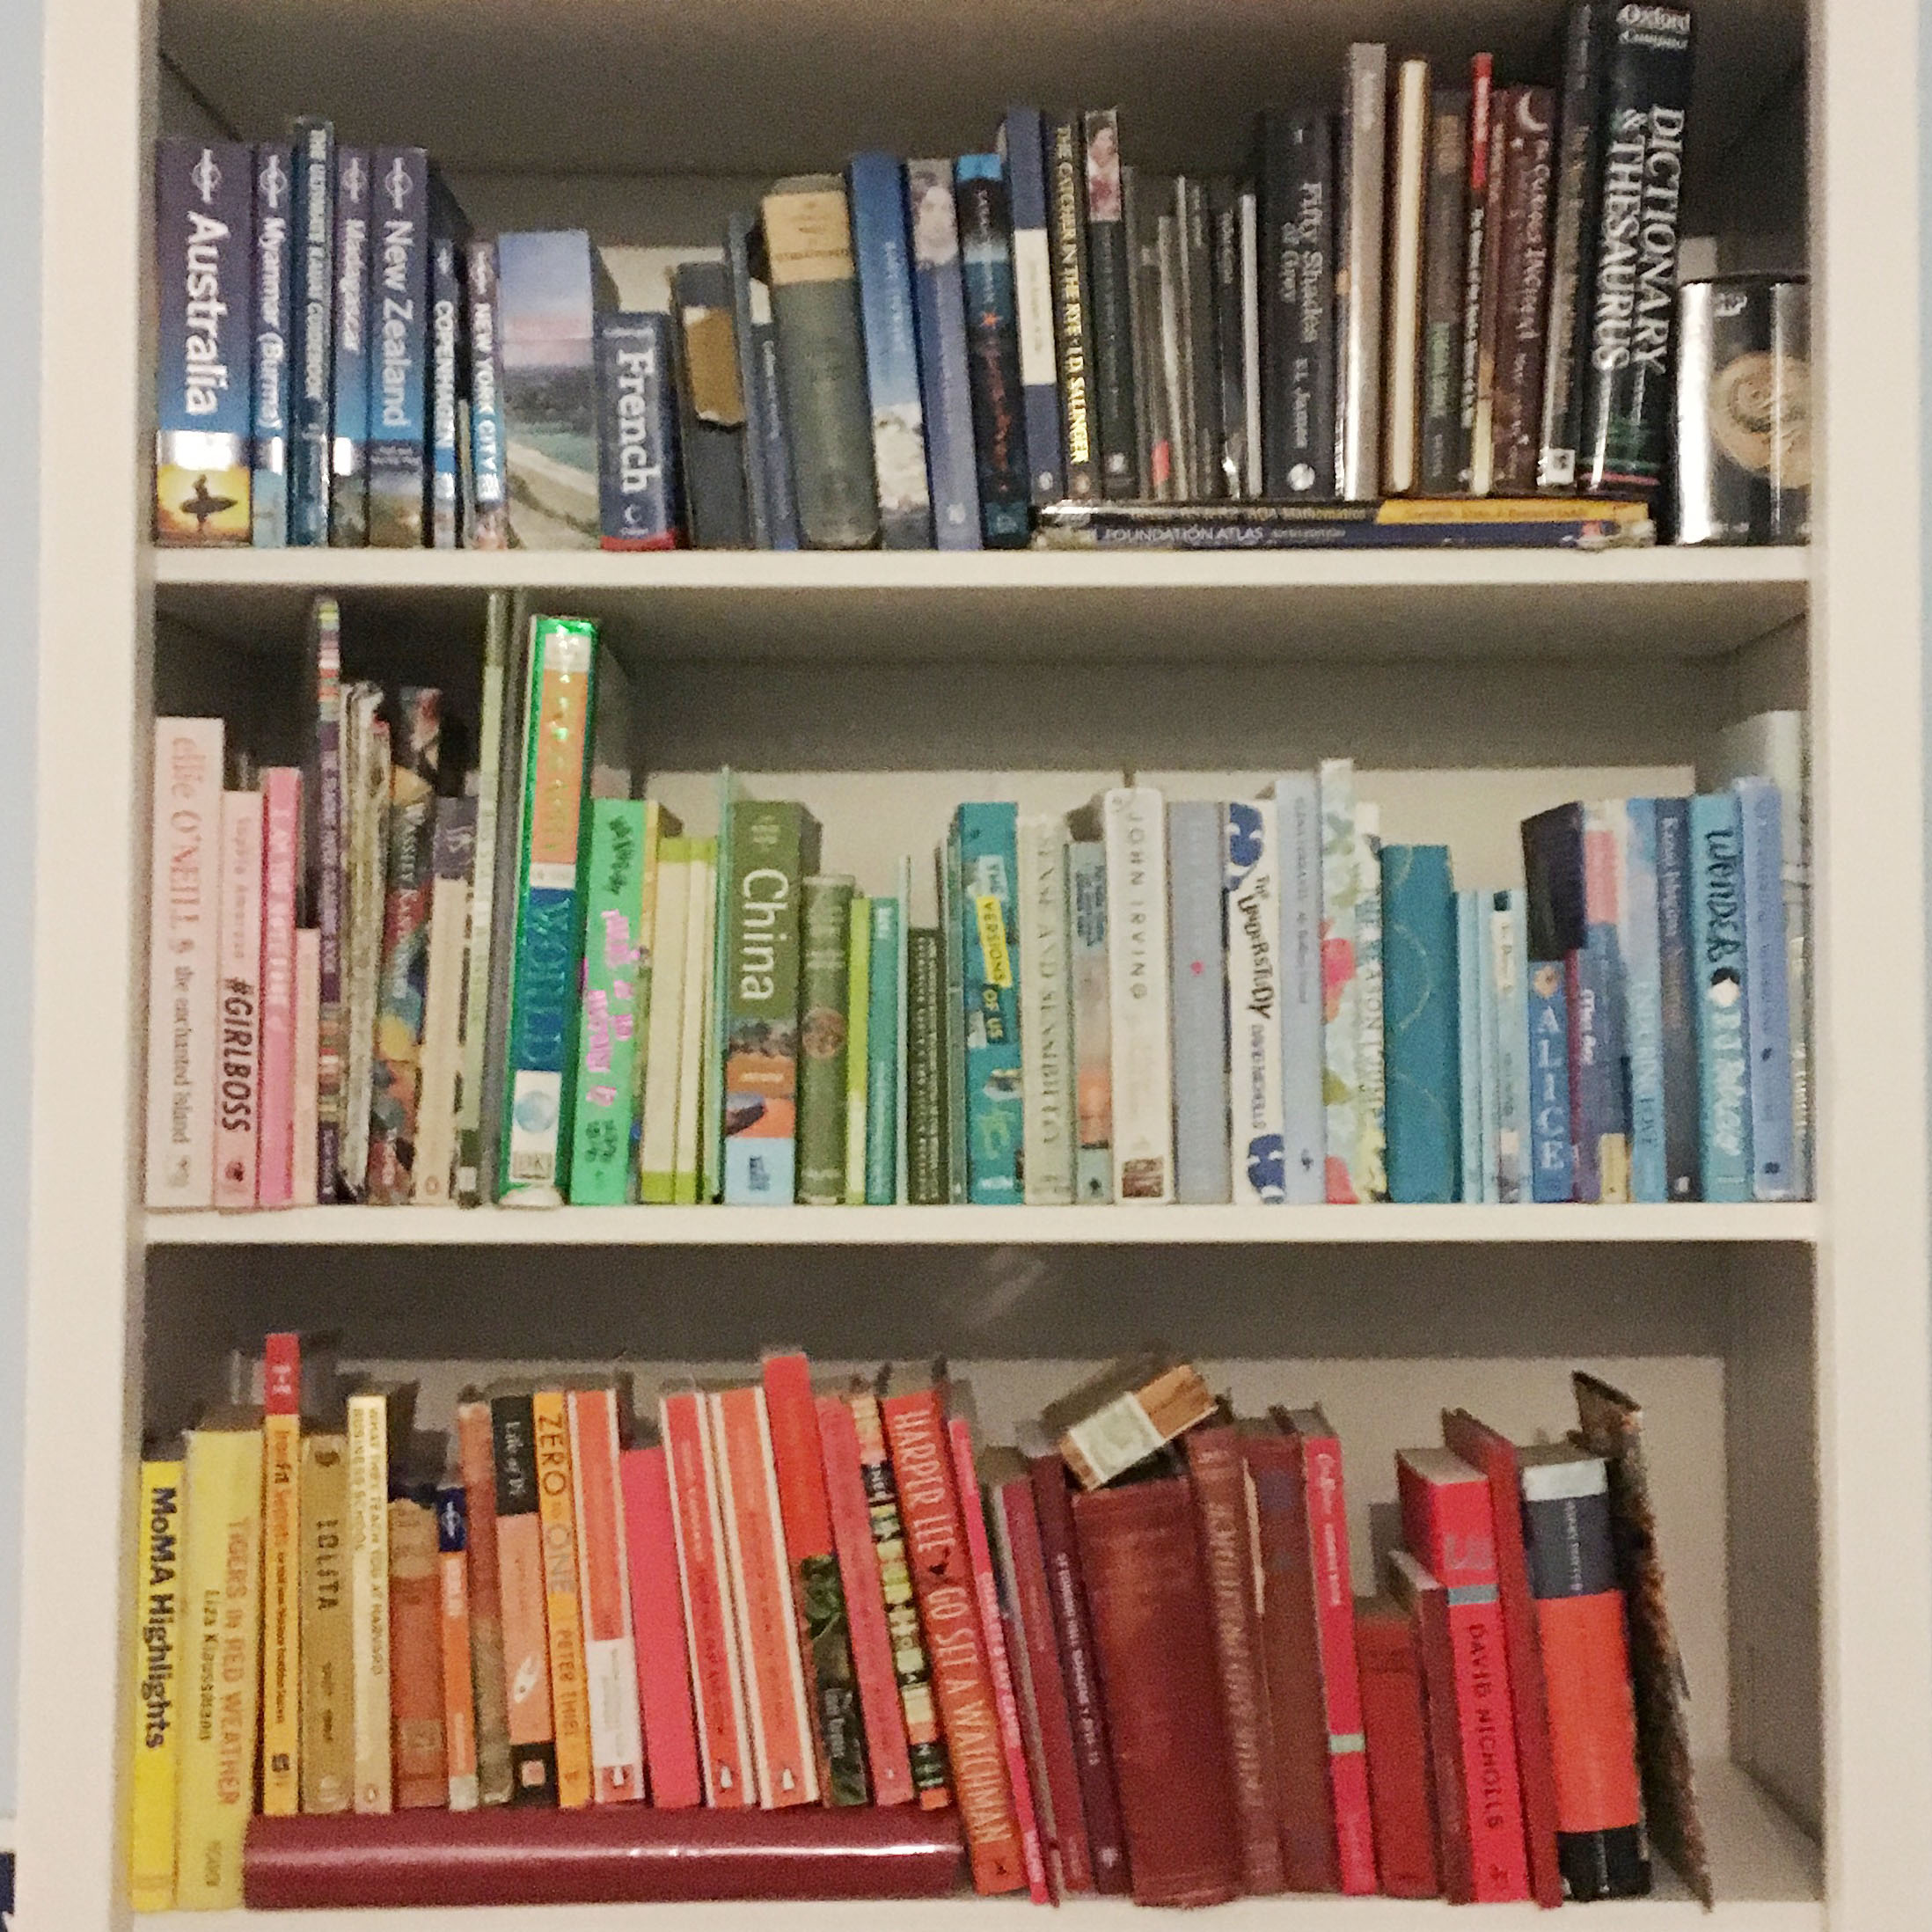 Colour coordinated bookshelves